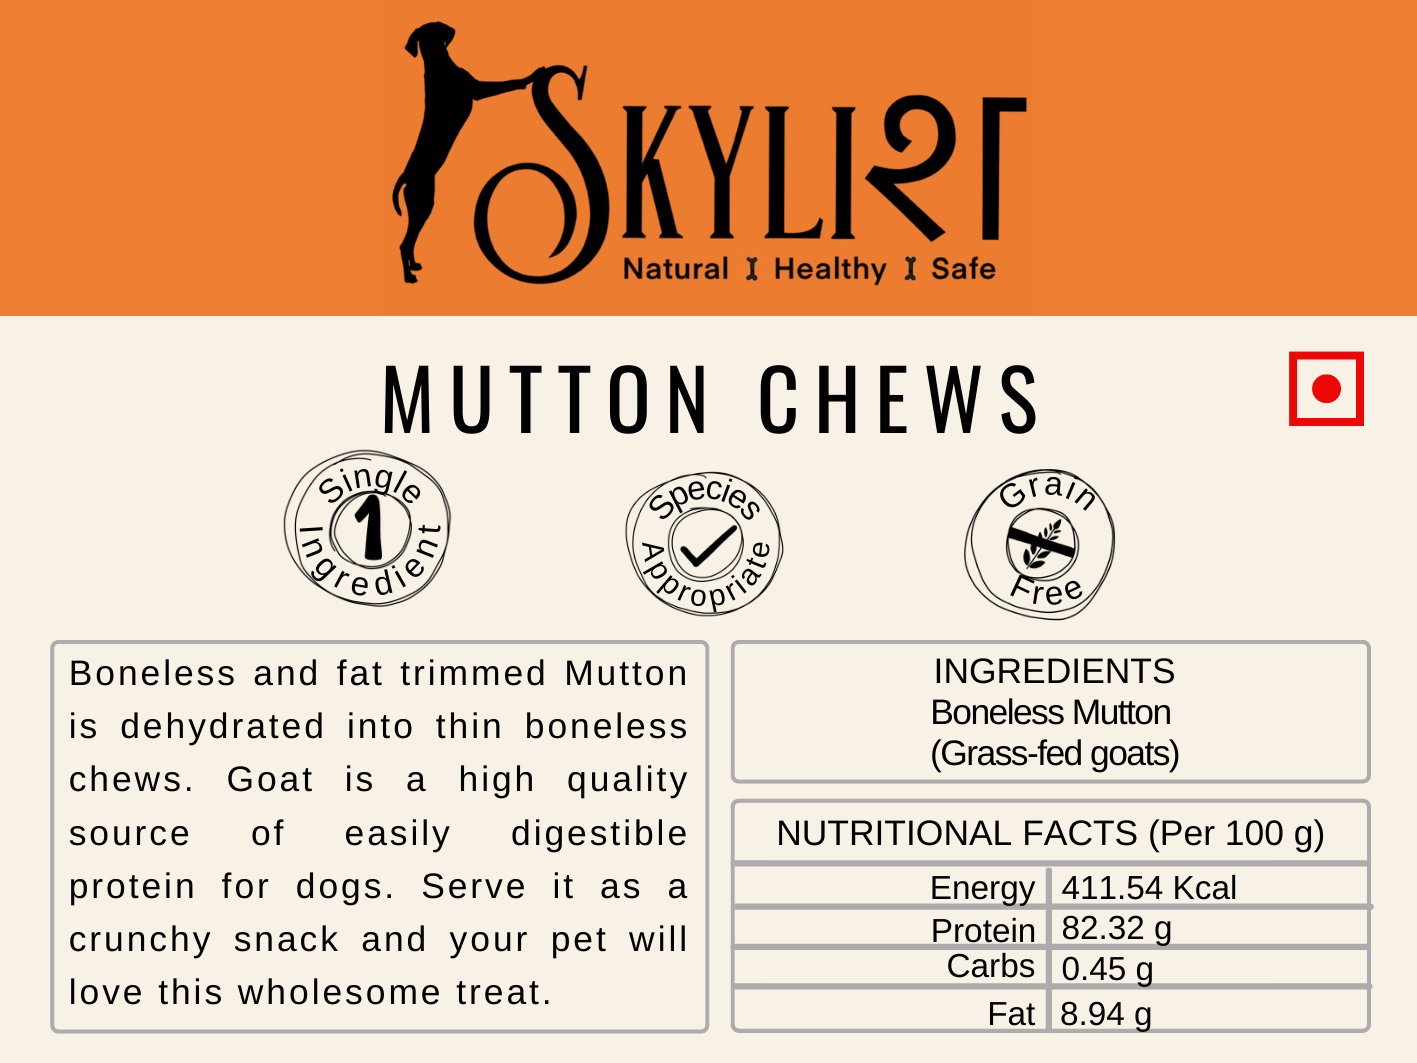 Skylish Mutton chew